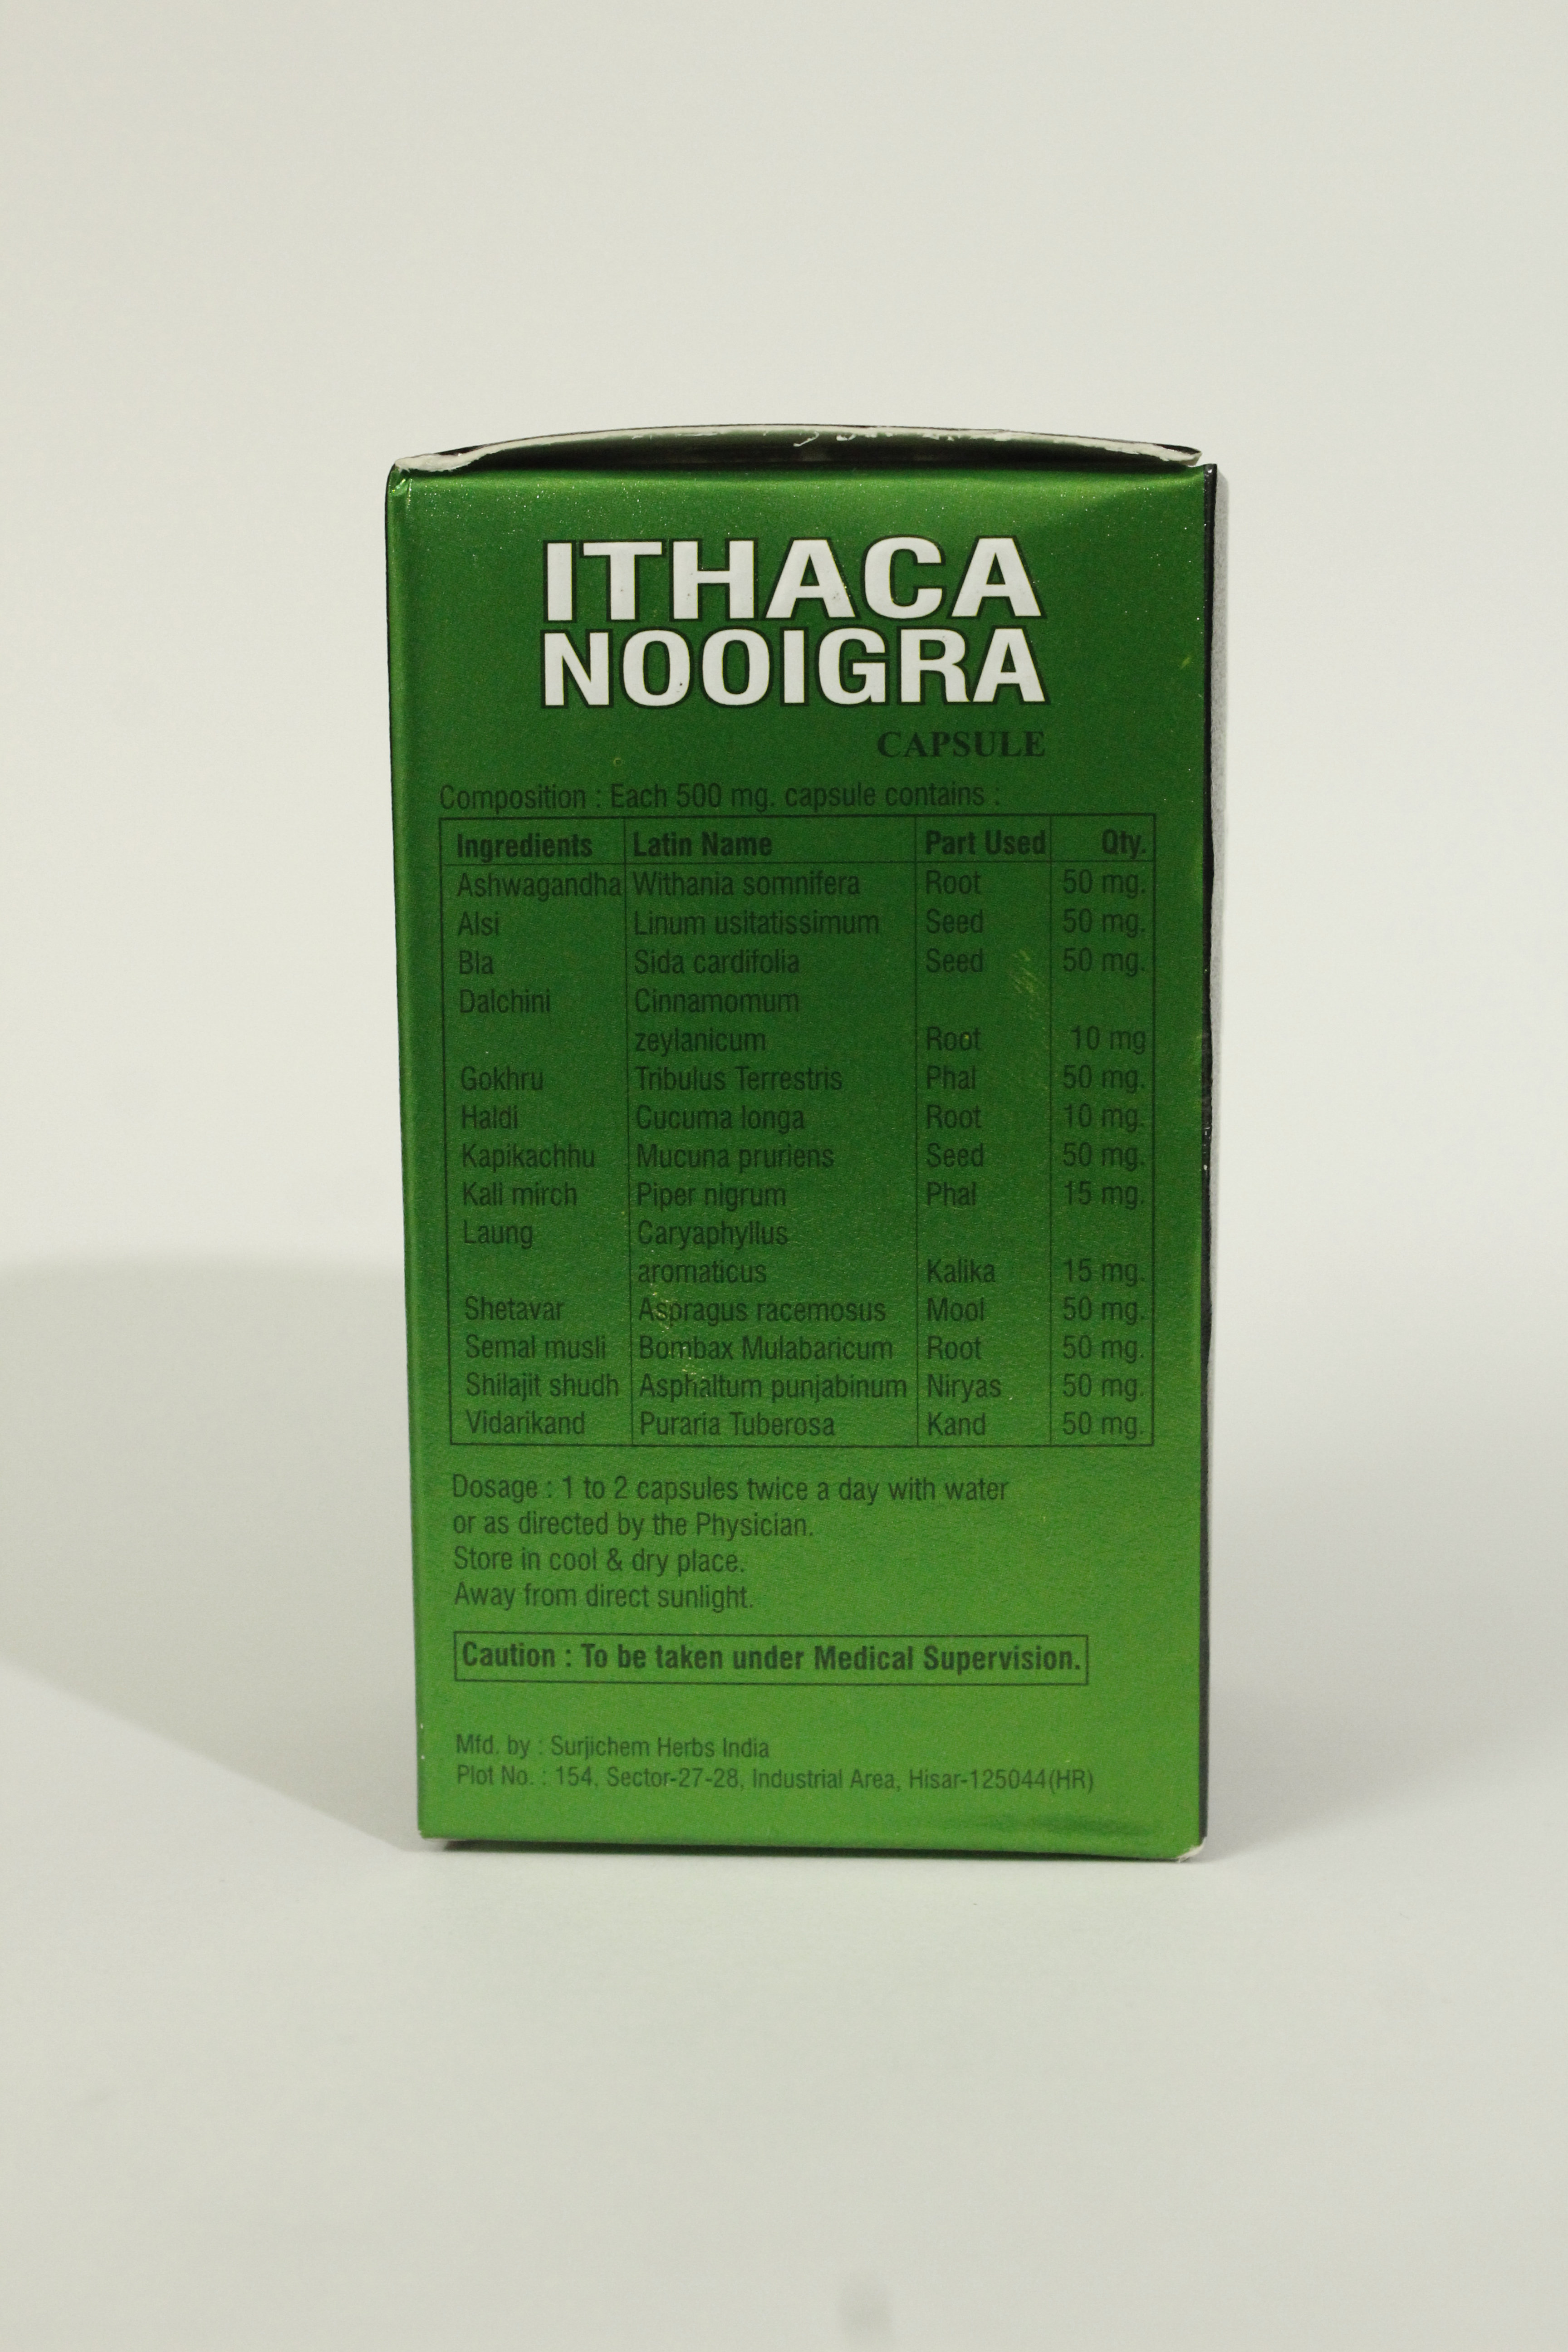 Buy Ithaca Nooigra Capsules at Best Price Online